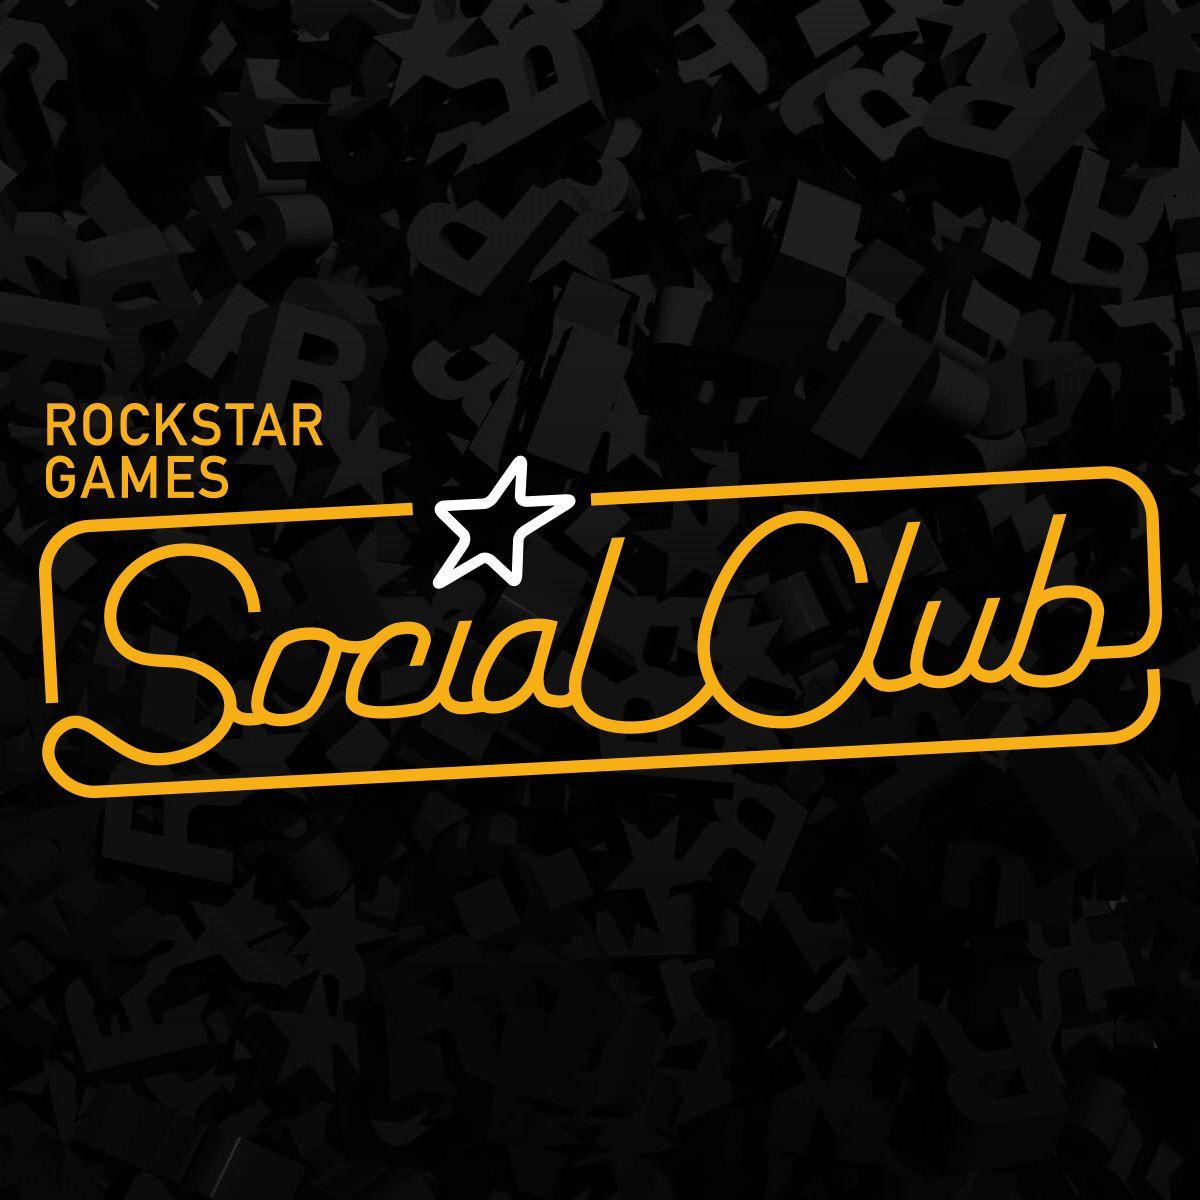 Rockstar social club как привязать steam фото 66